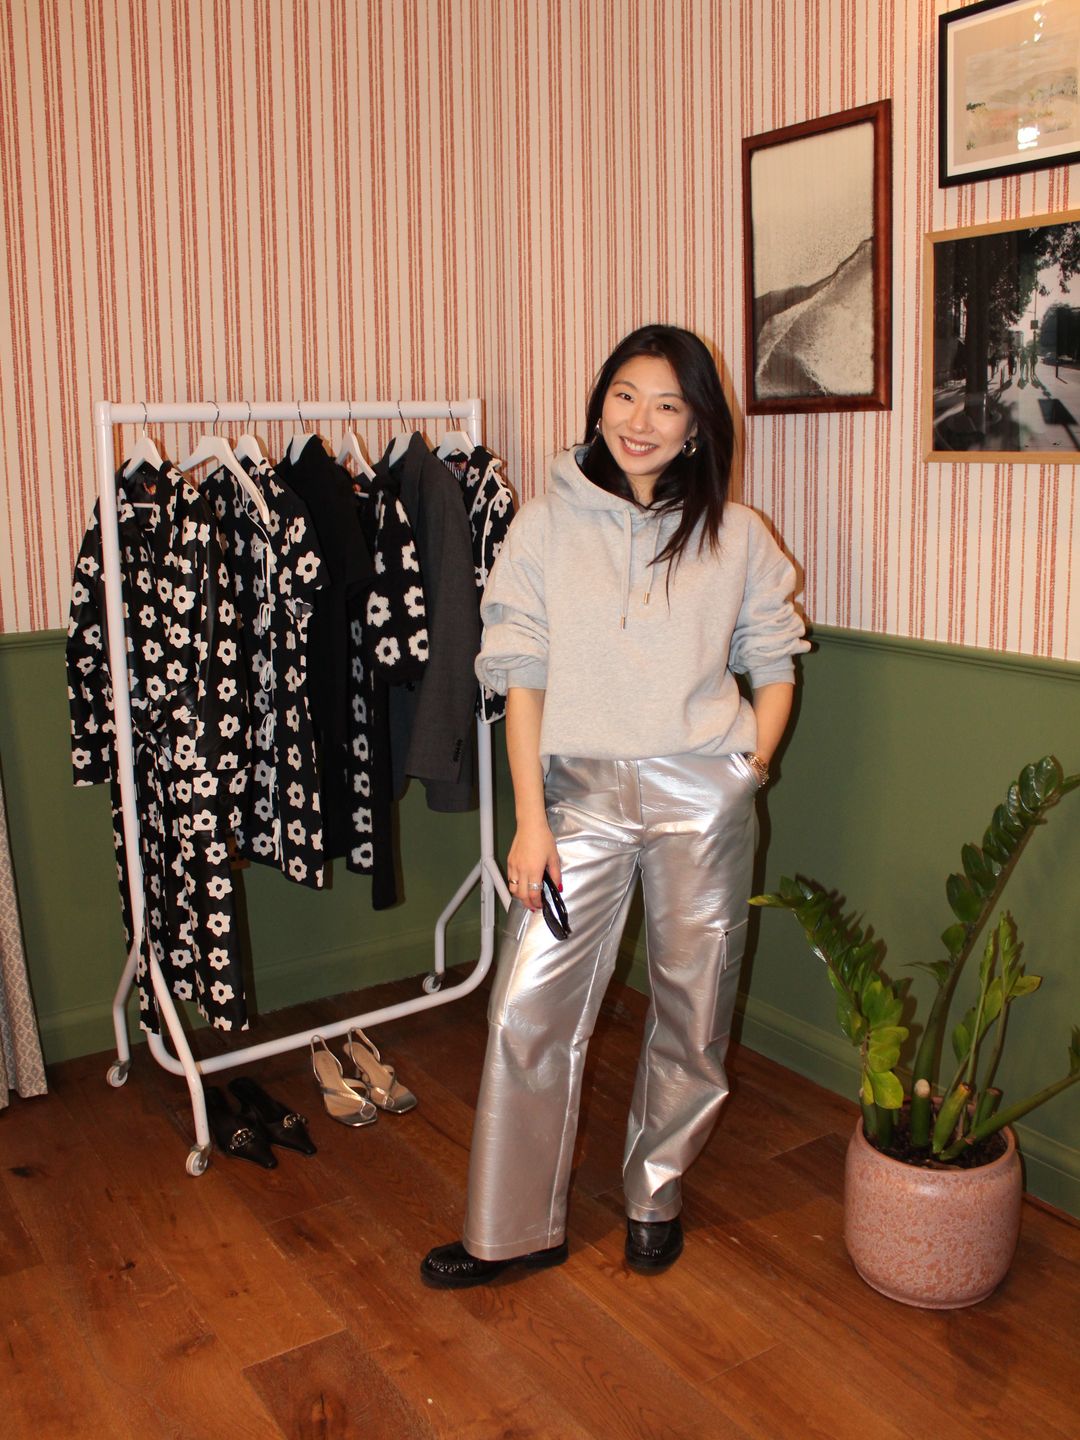 Haeni Kim poses in metallic trousers for a social media shoot